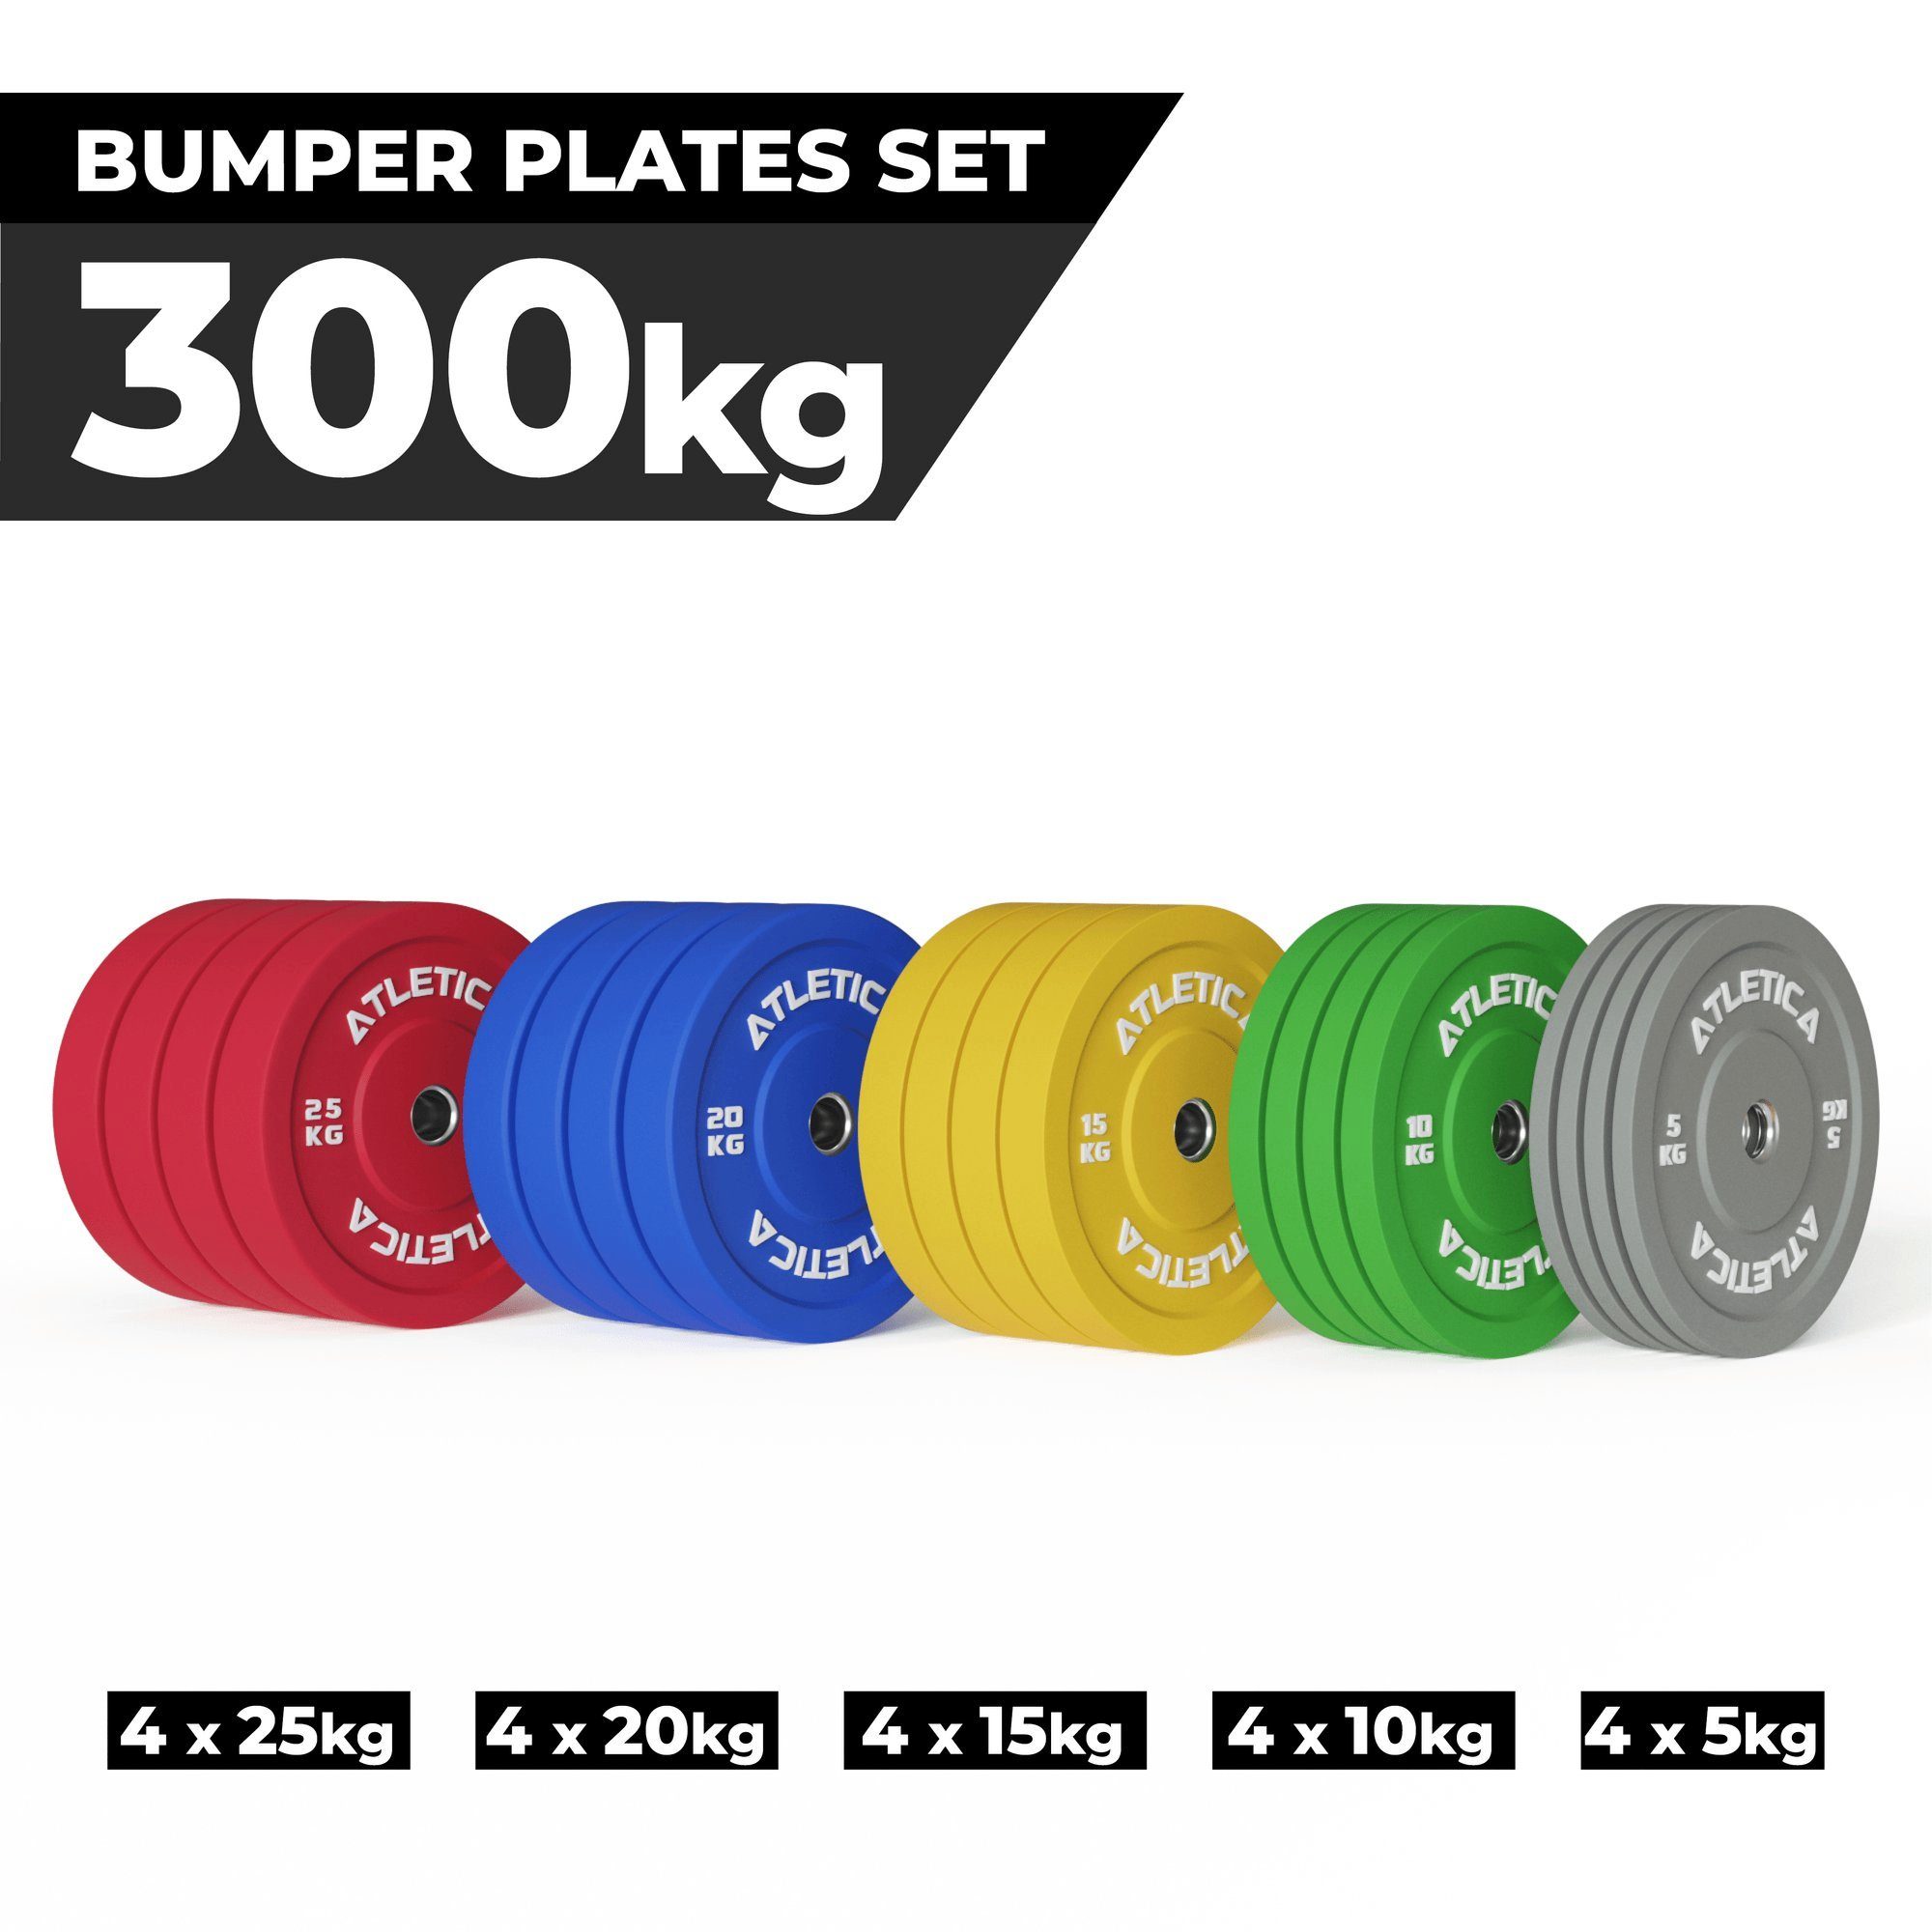 Hantelscheiben 300kg Set Plates Color ATLETICA Bumper